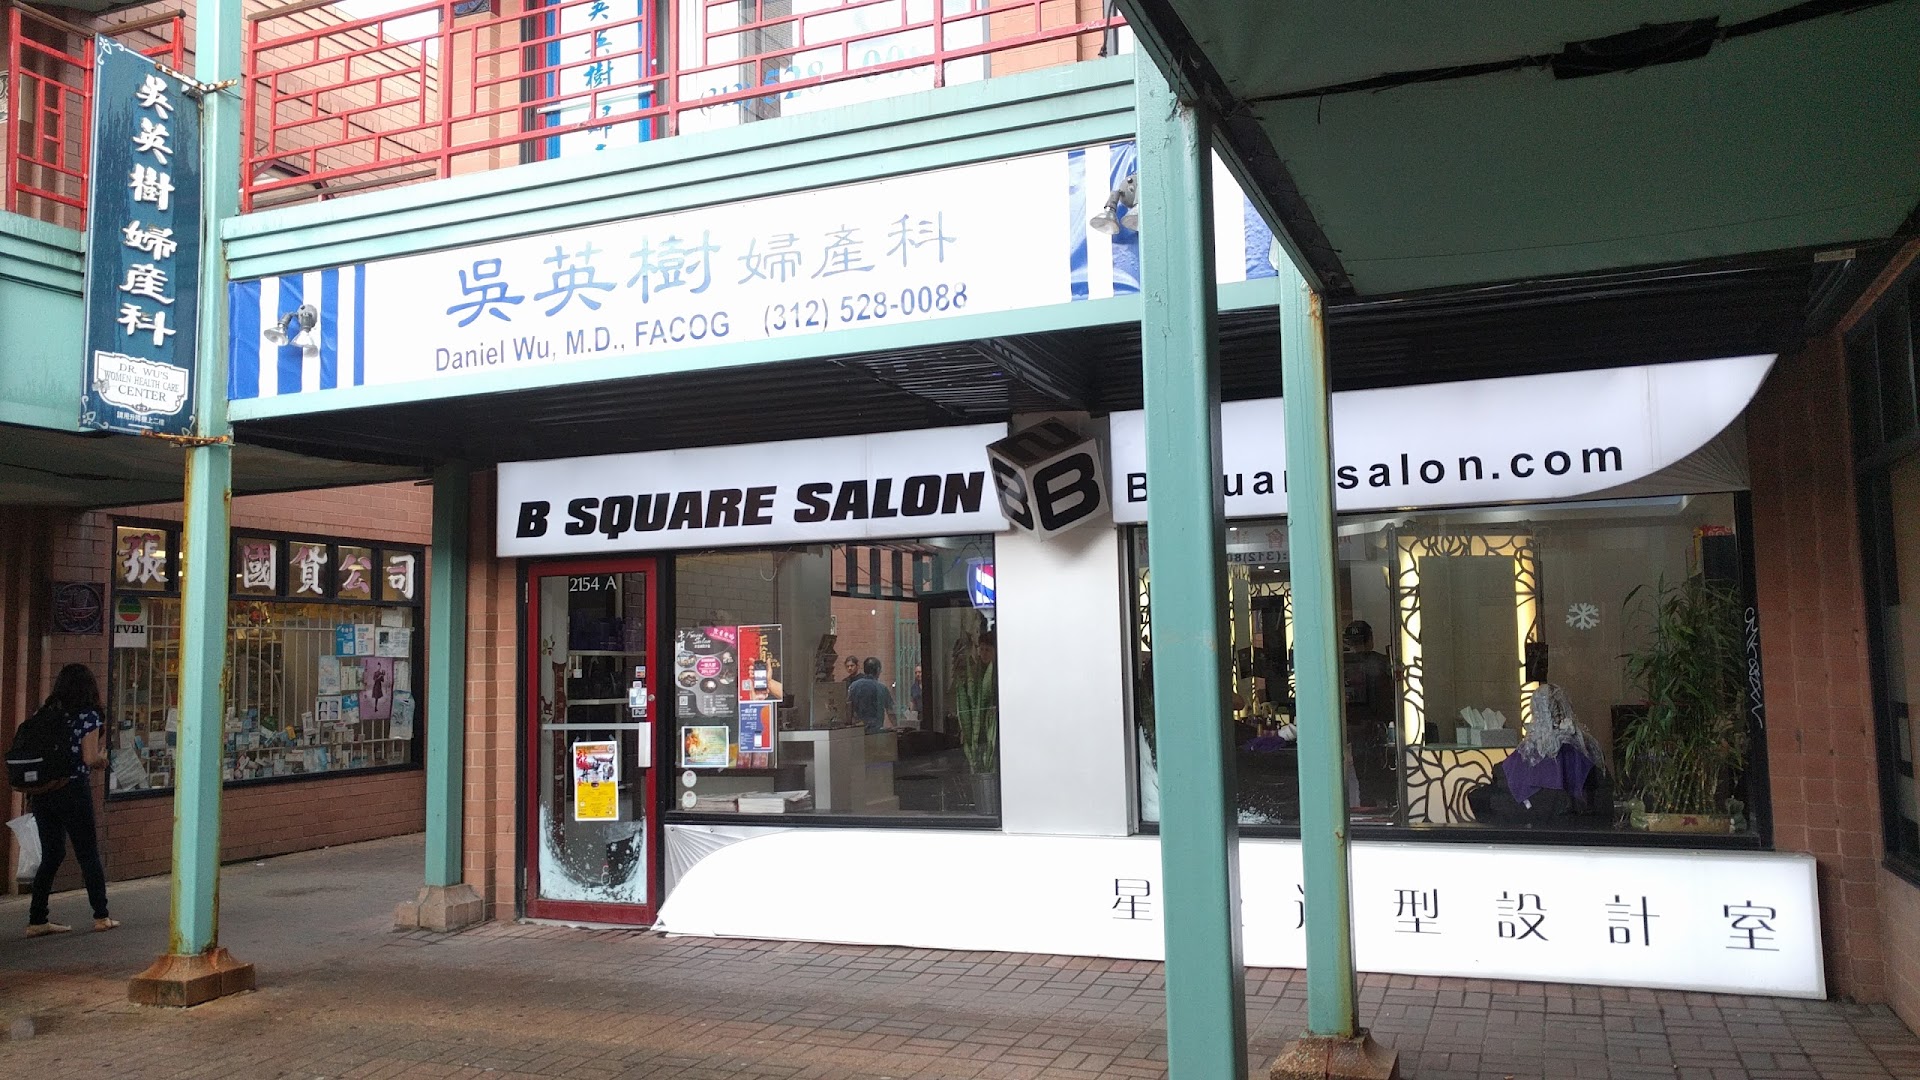 B Square Salon